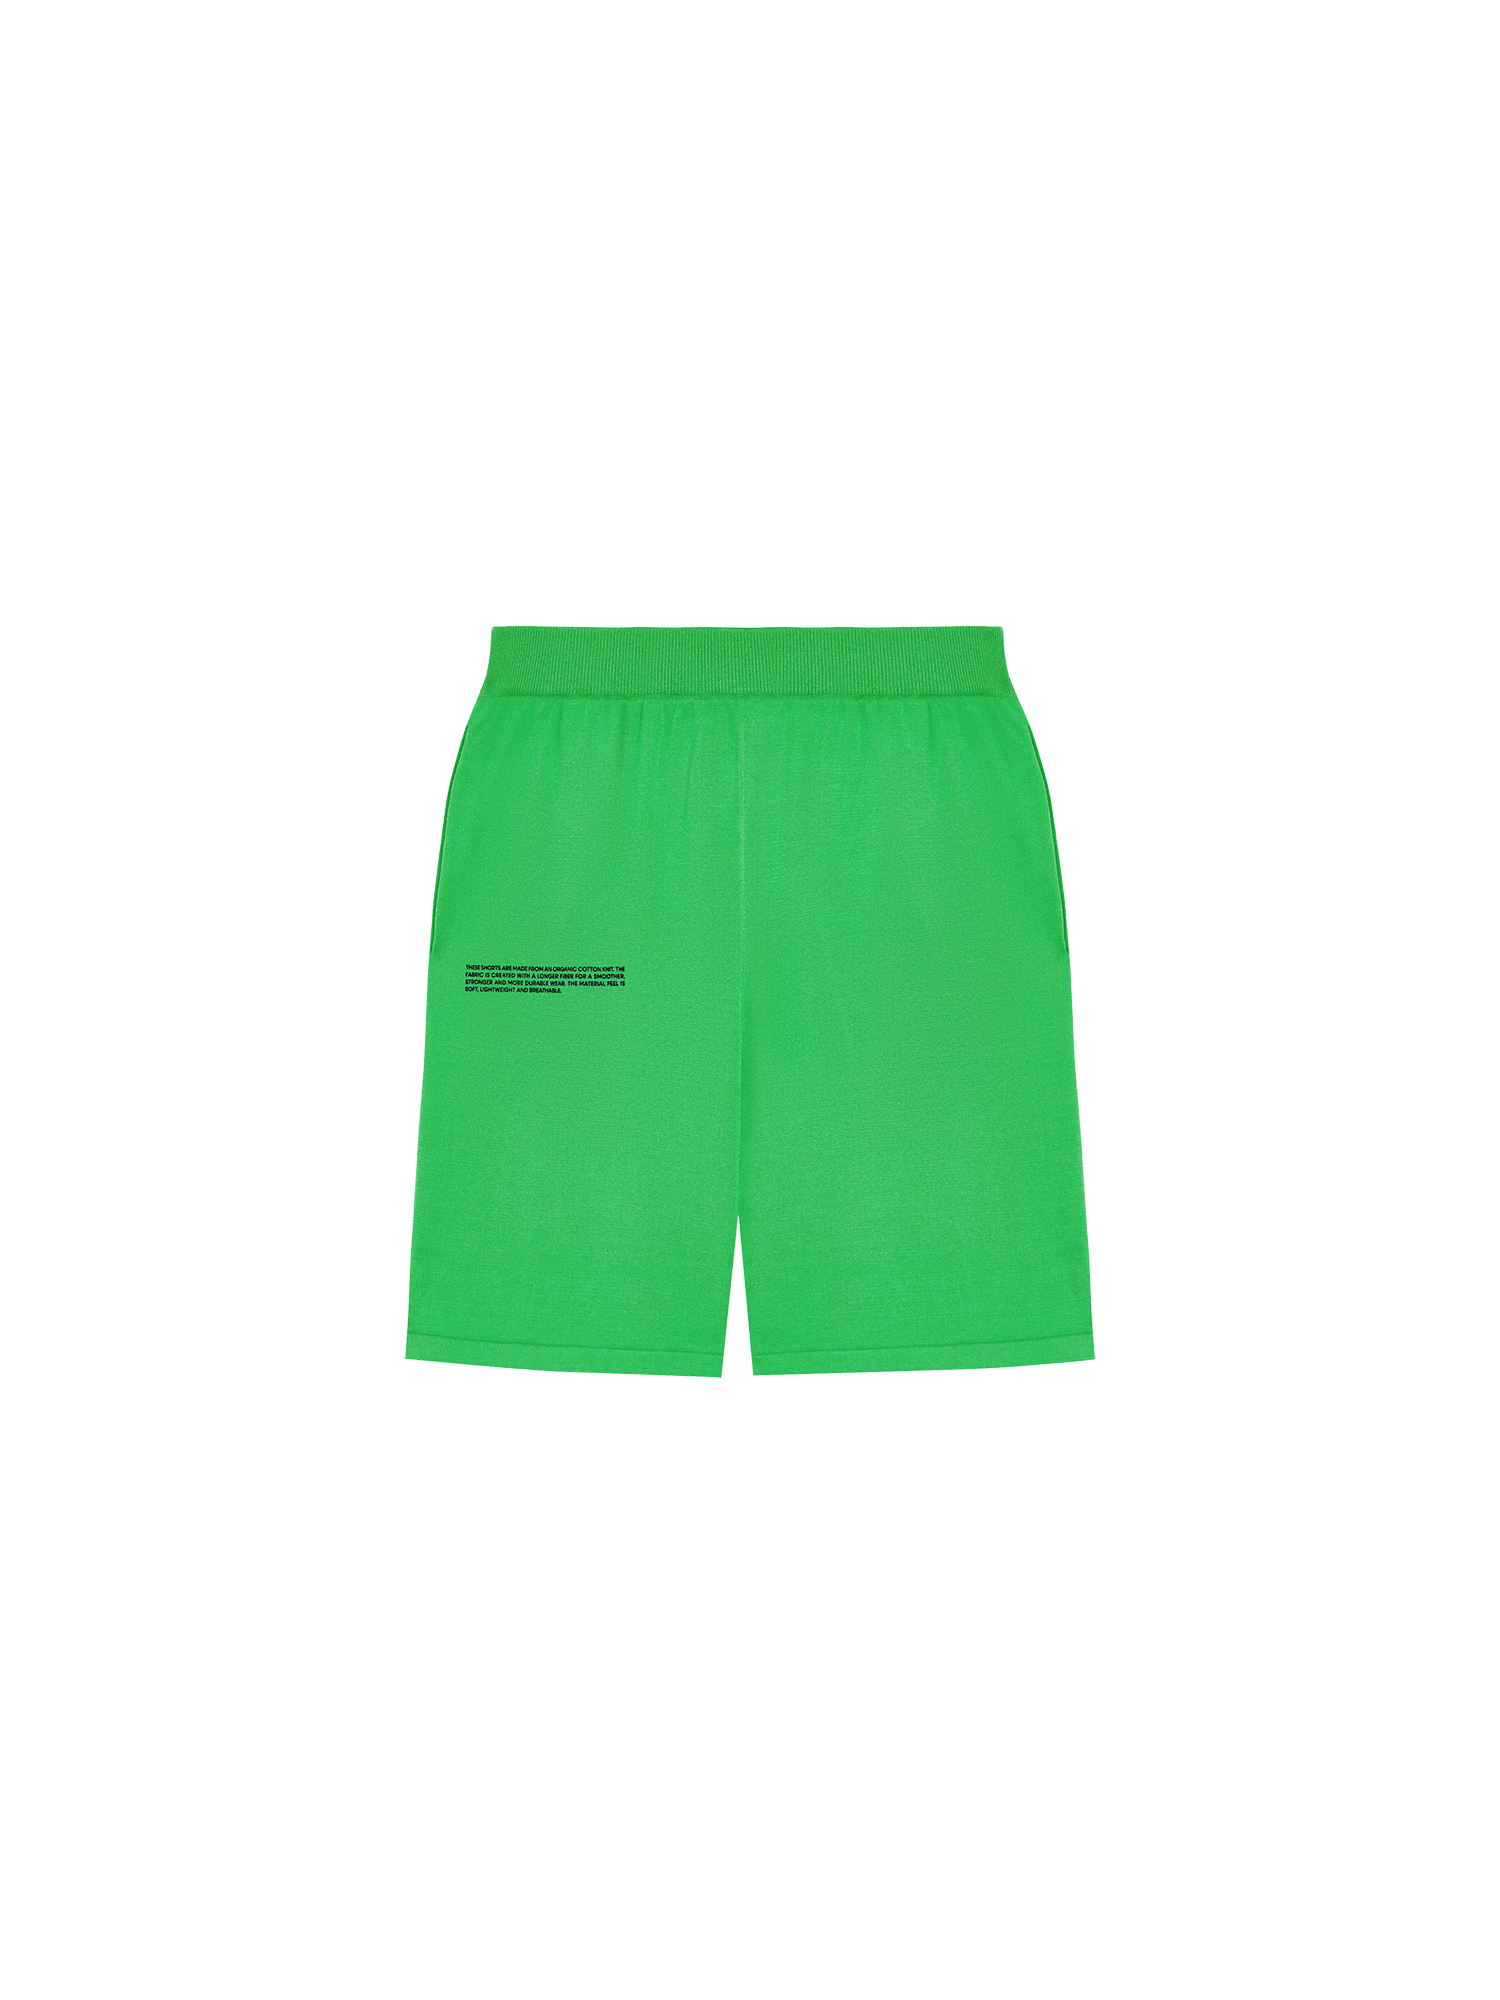 Cotton-Knit-Long-Shorts-Jade-Green-packshot-4